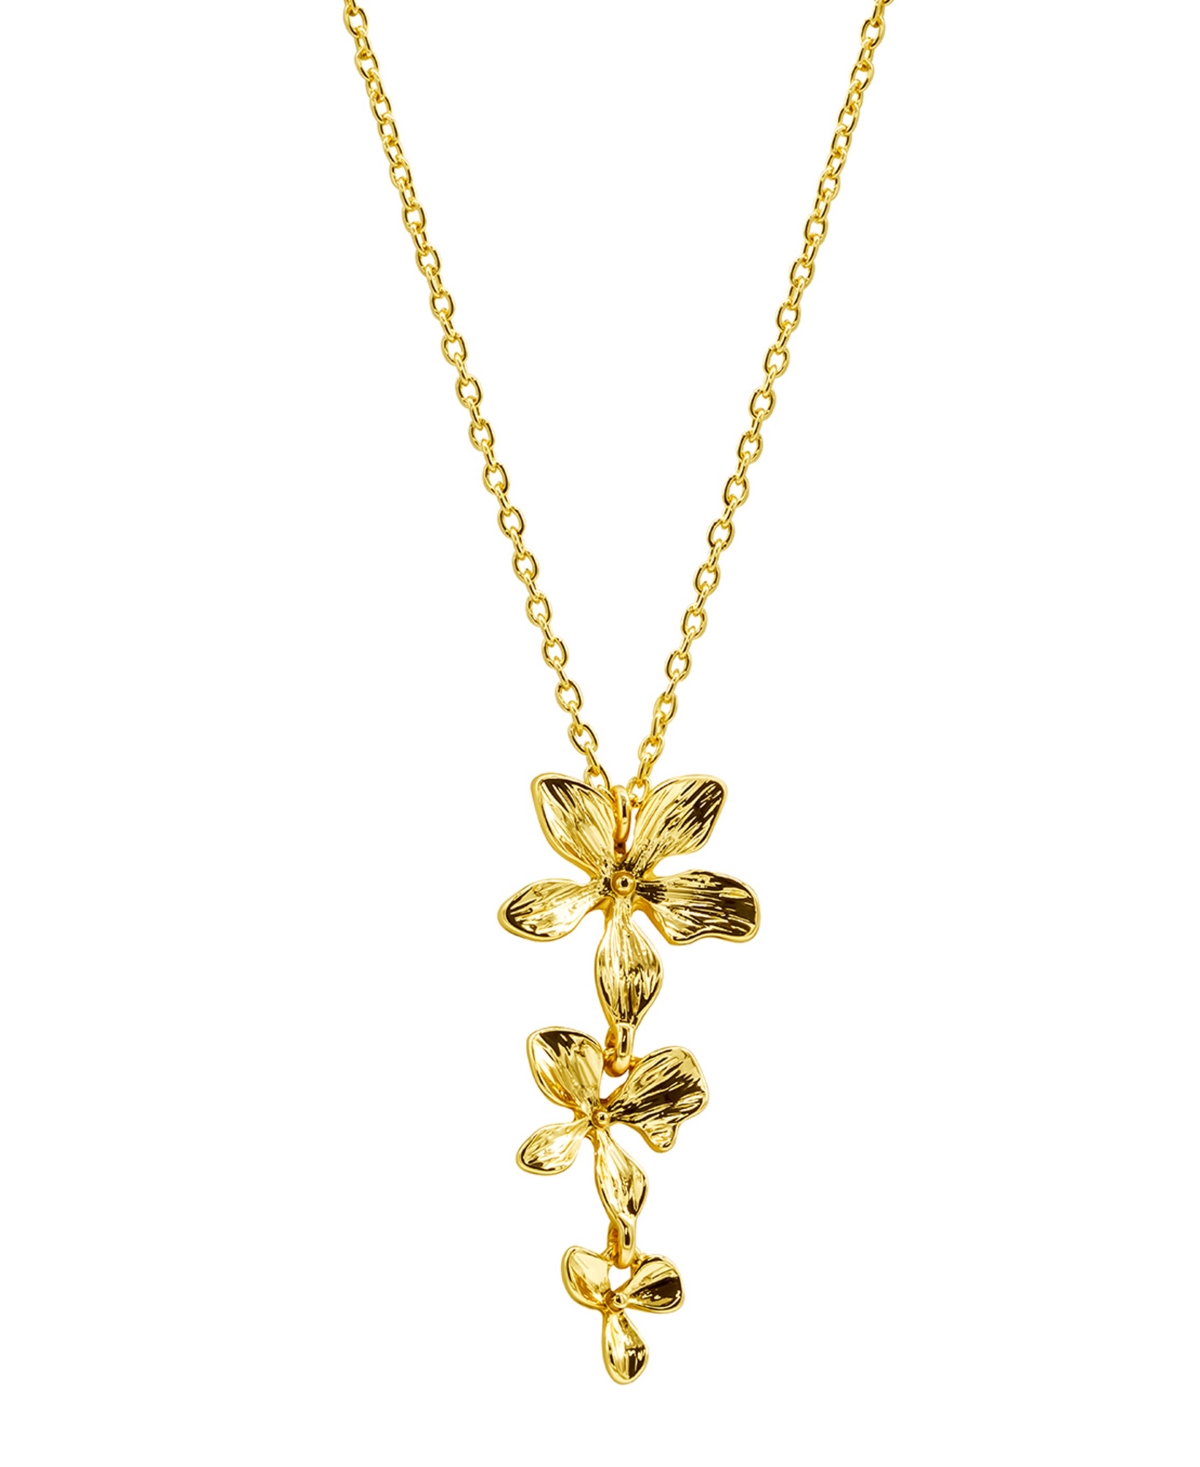 Shop Adornia 14k Gold-plated 3-petal Necklace